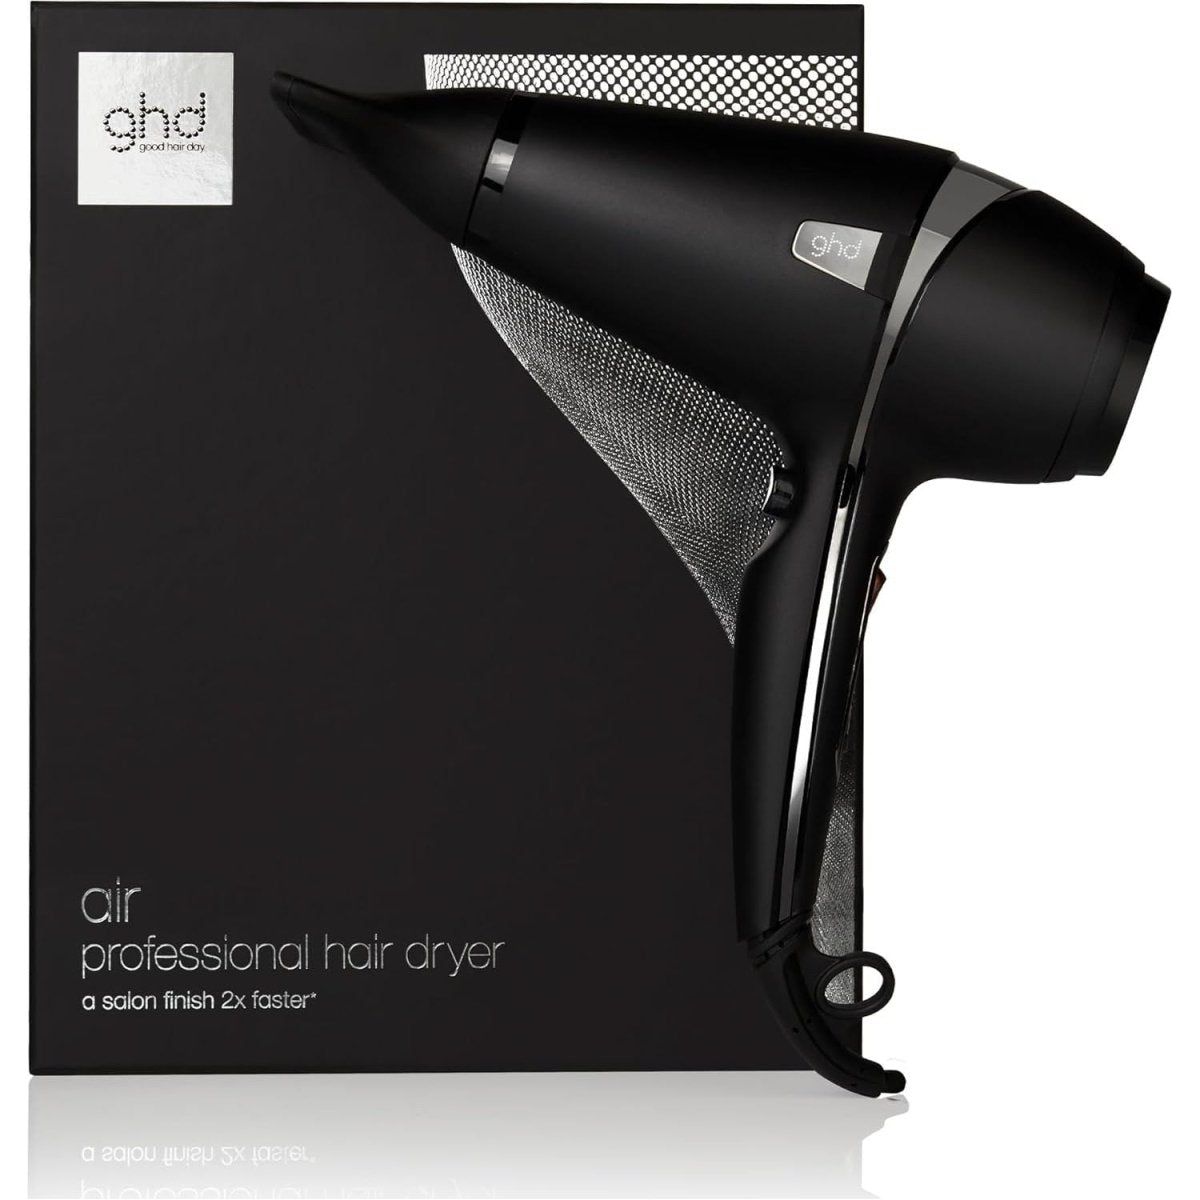 ghd Air Professional Use Hair Dryer - DG International Ventures Limited